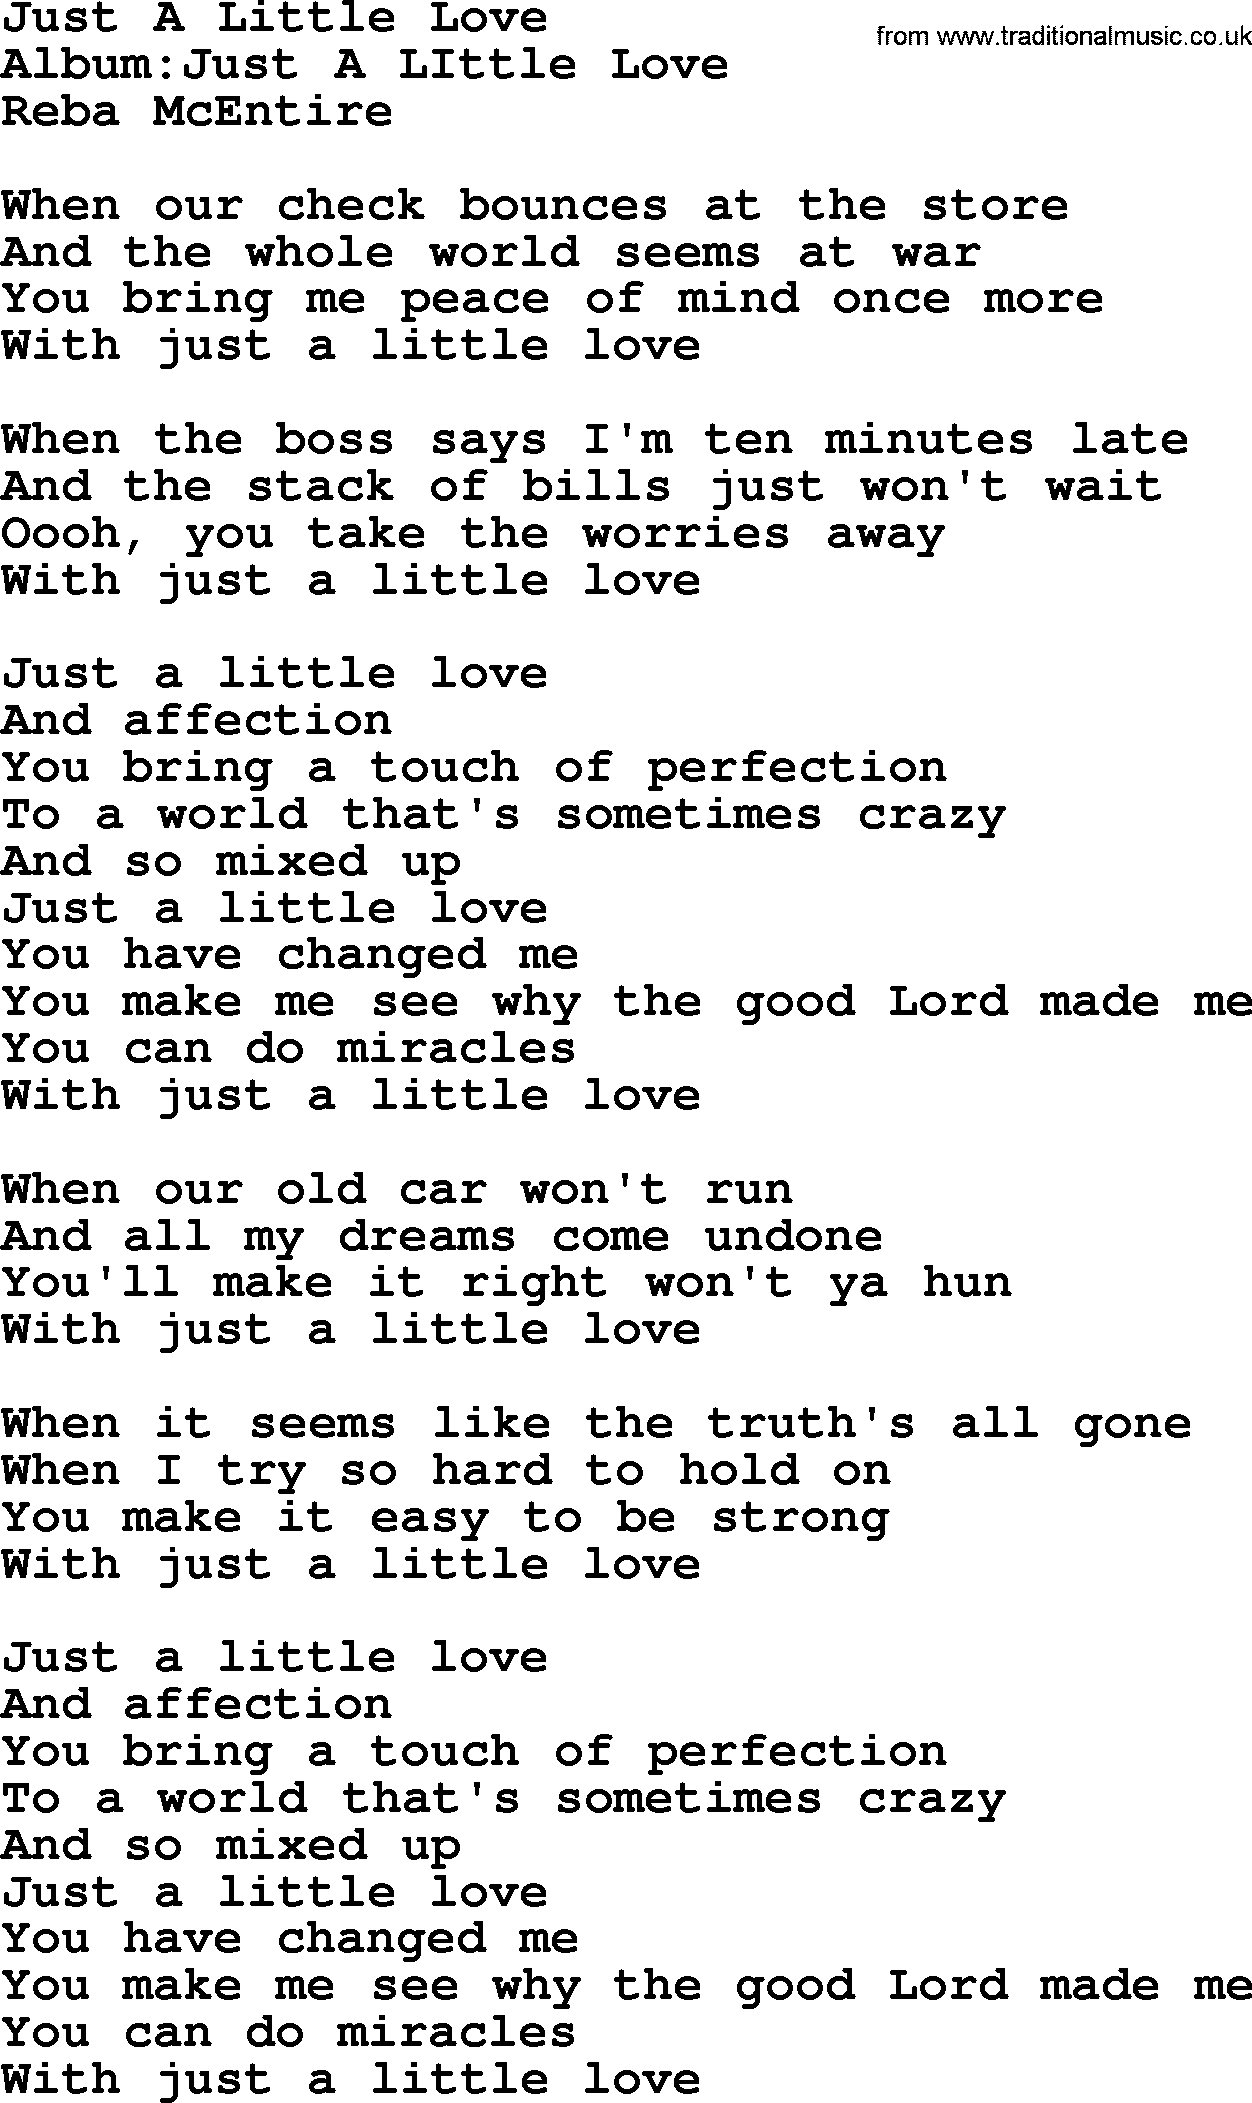 Reba McEntire song: Just A Little Love lyrics